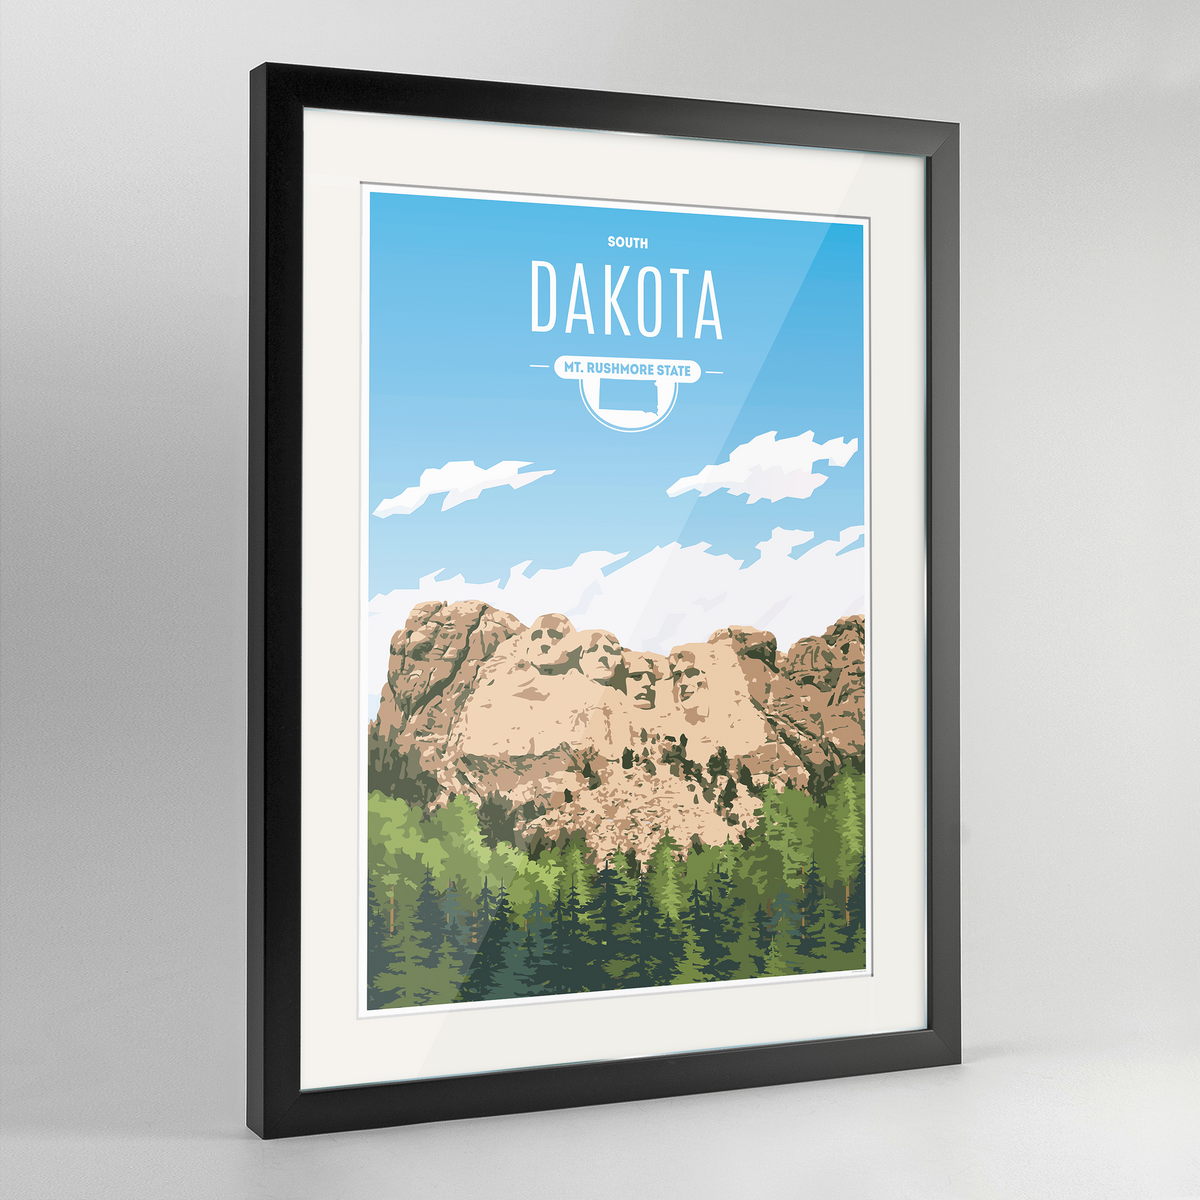 South Dakota State Frame Print